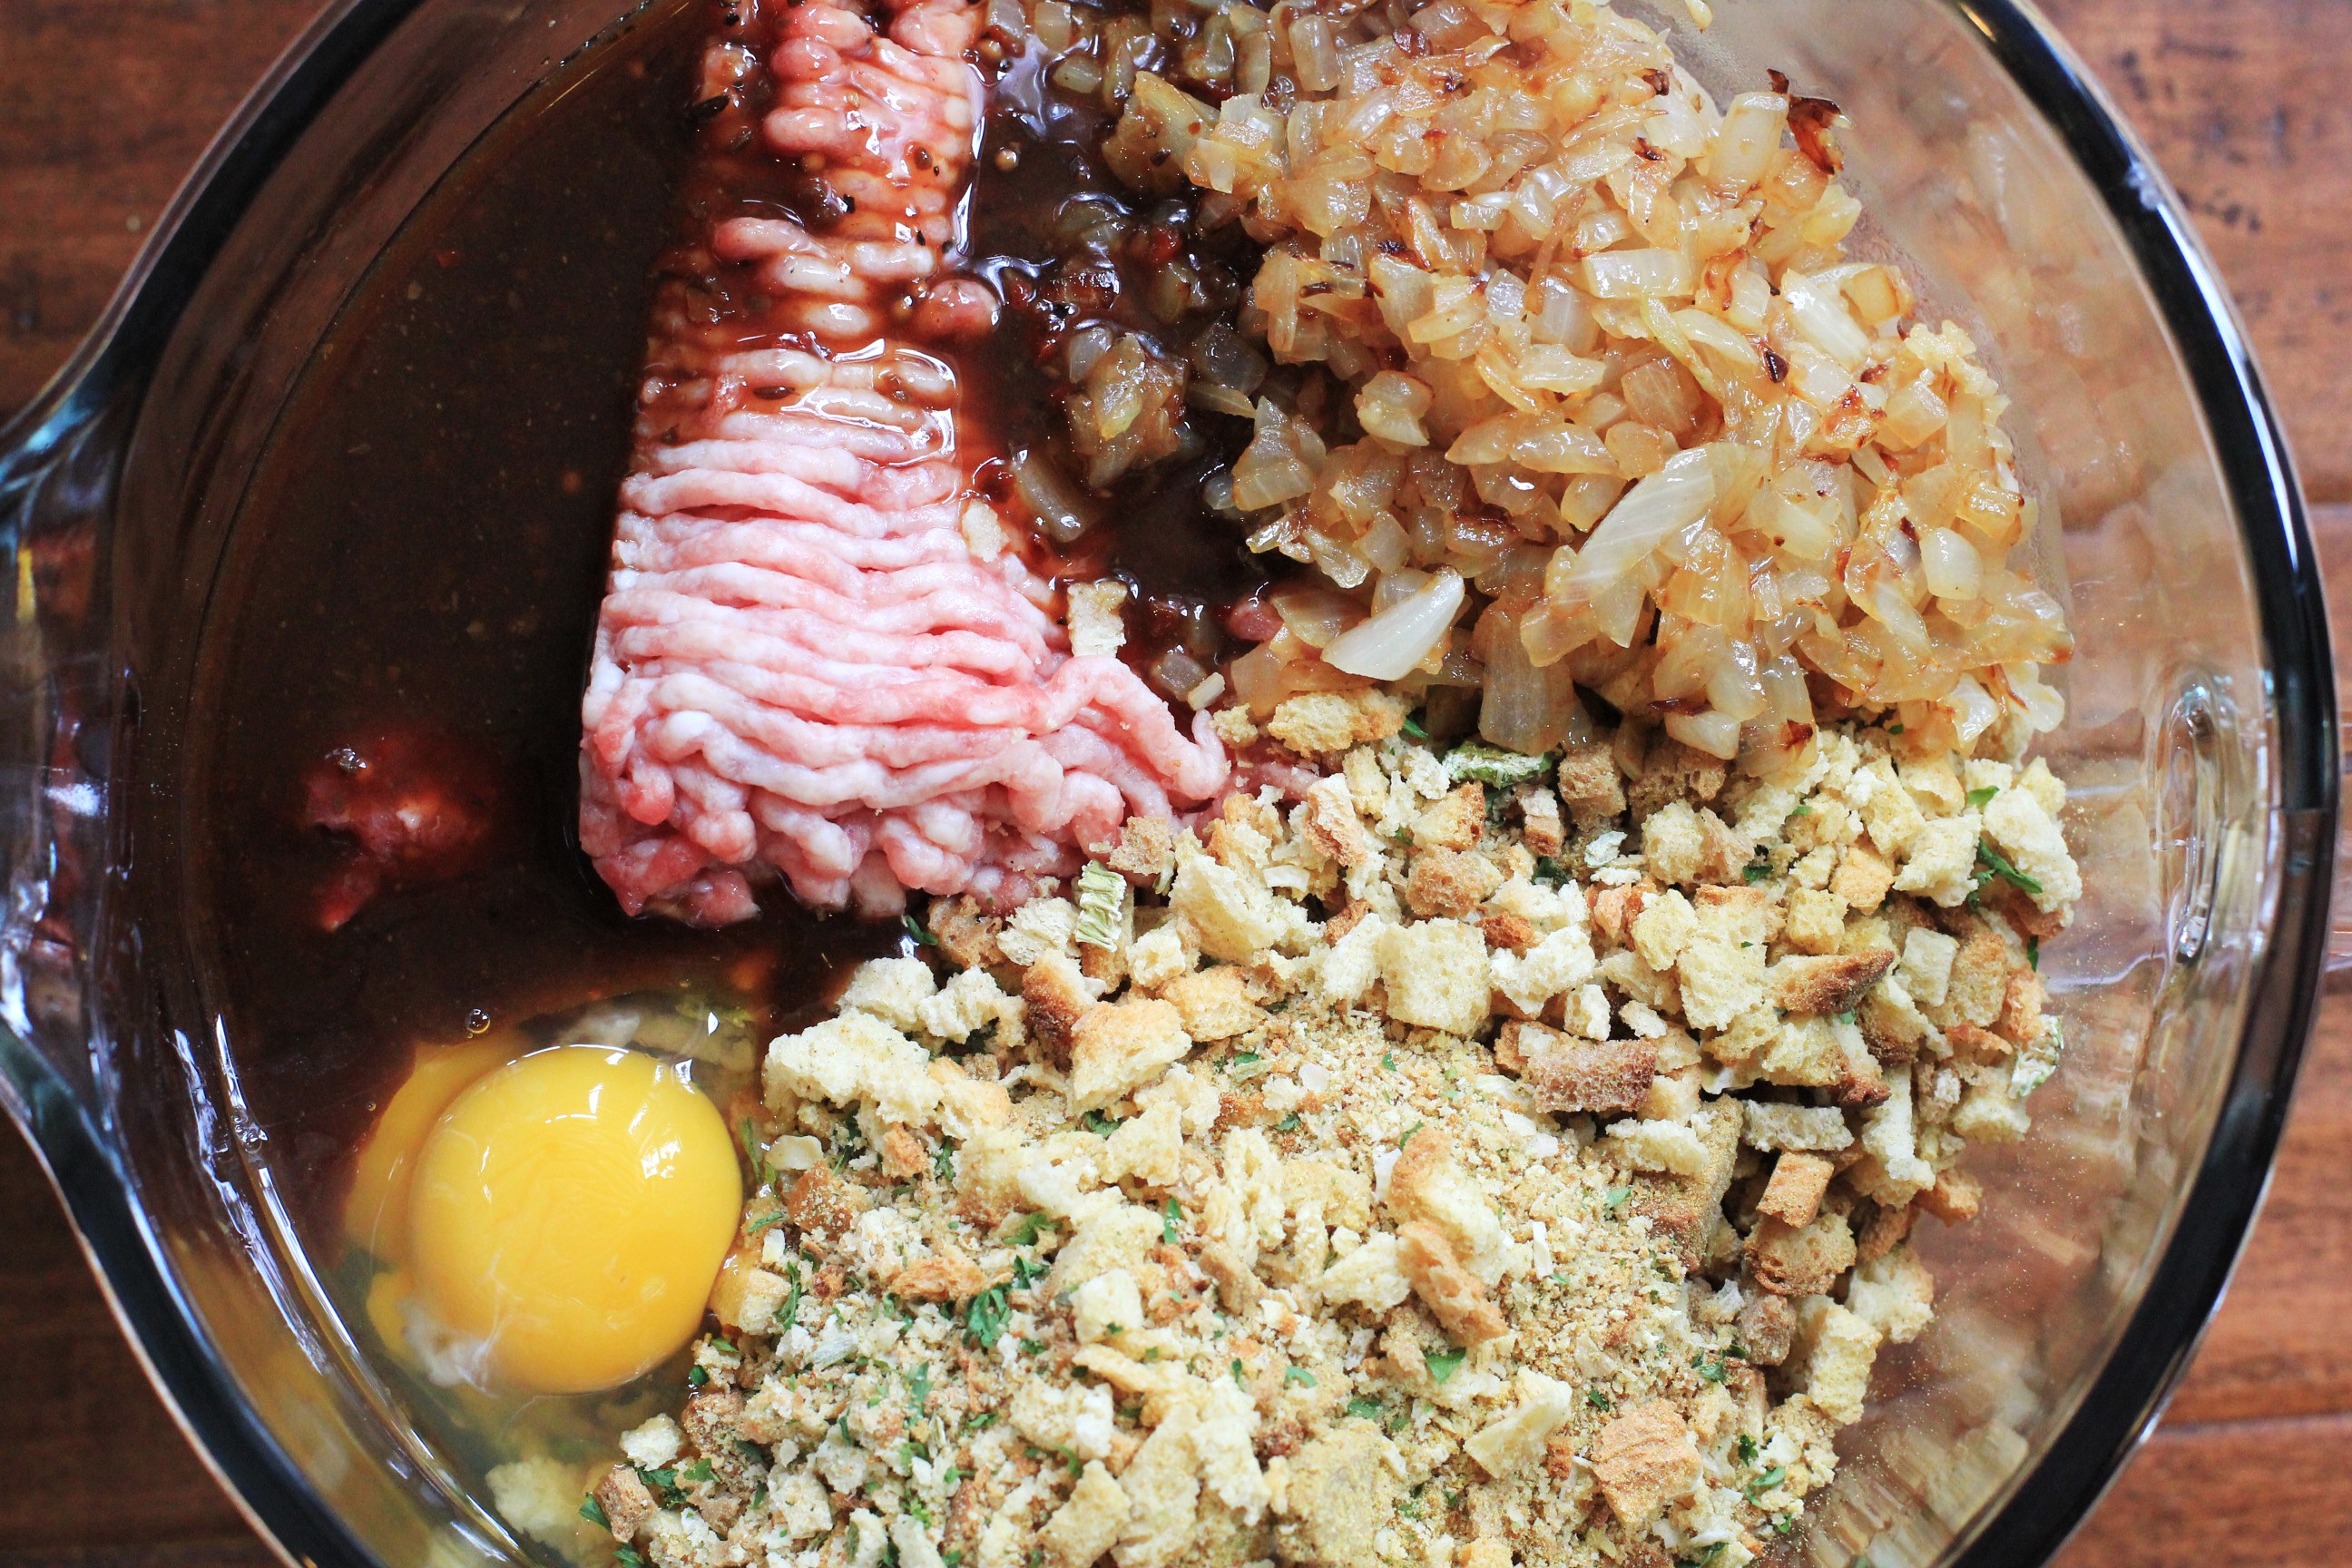 Recipe: How to Make Meatballs